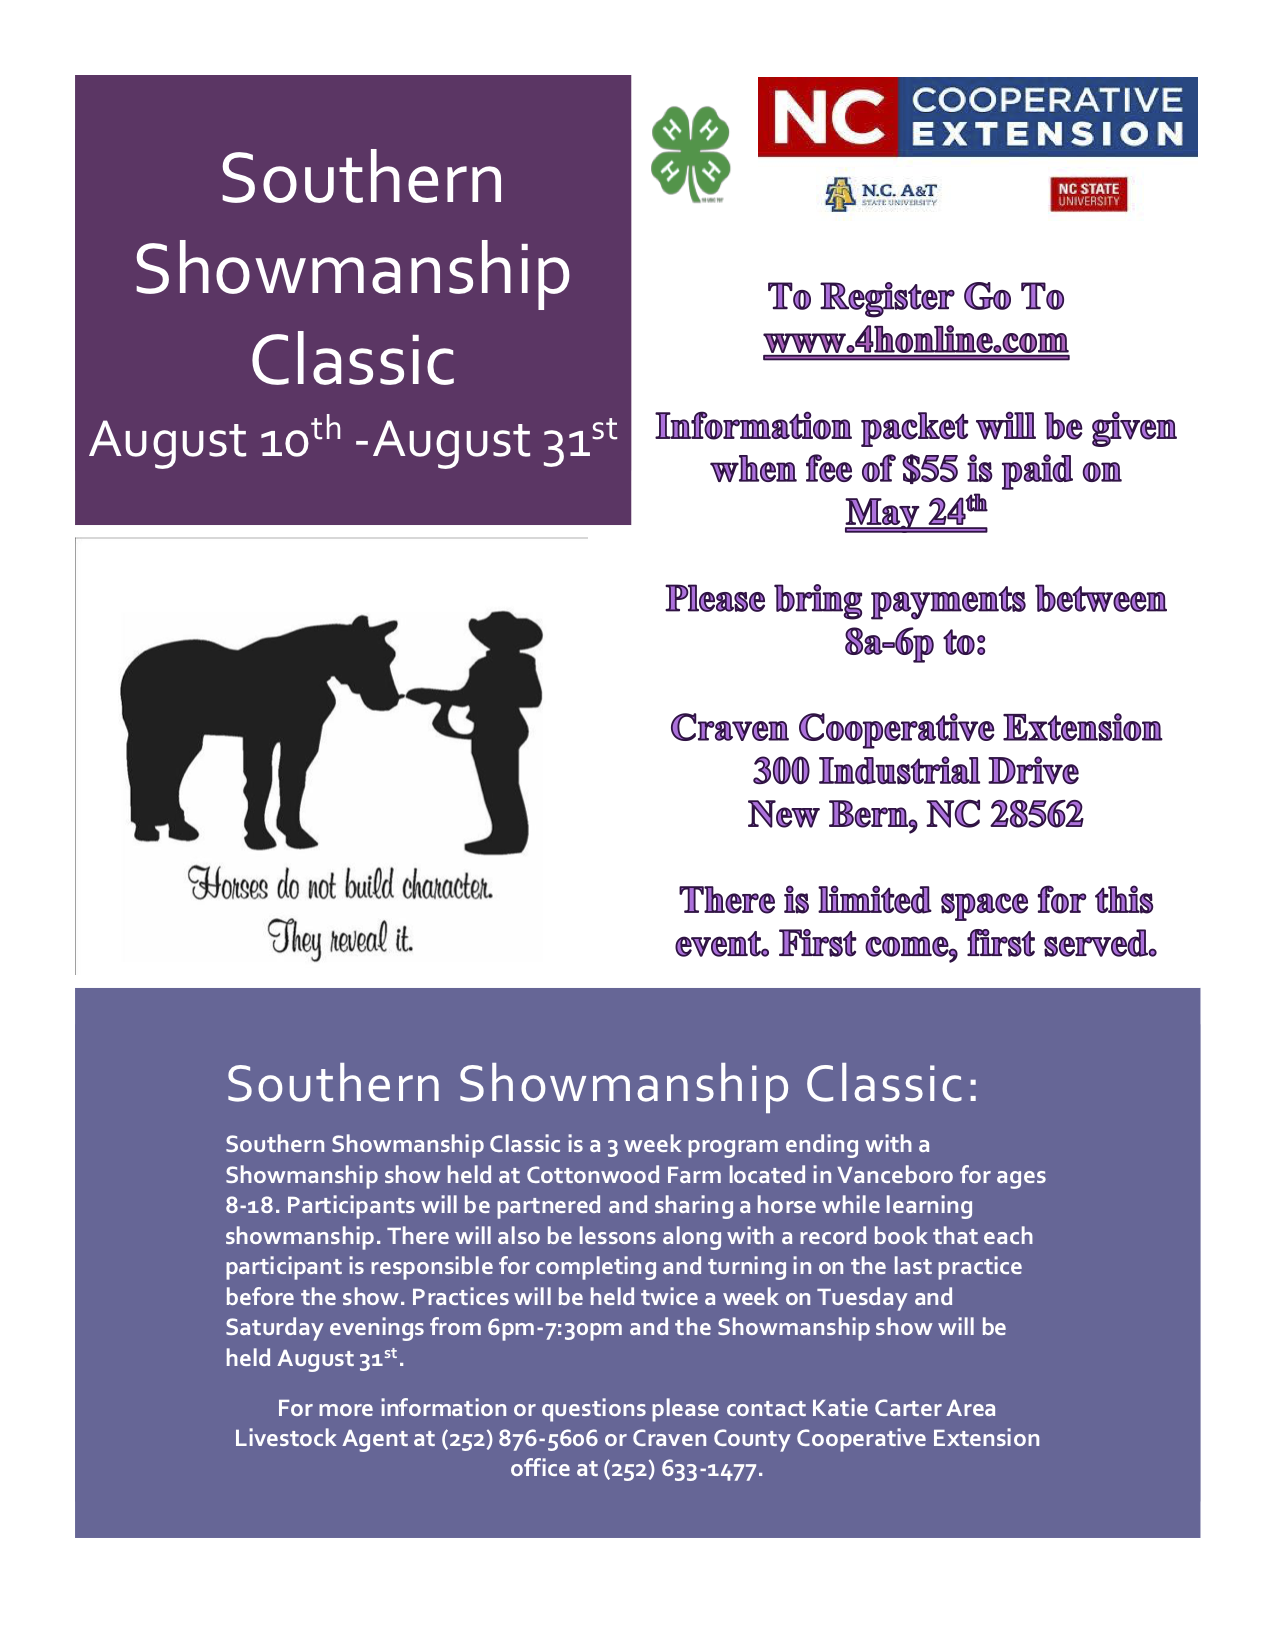 Horse Show flyer image